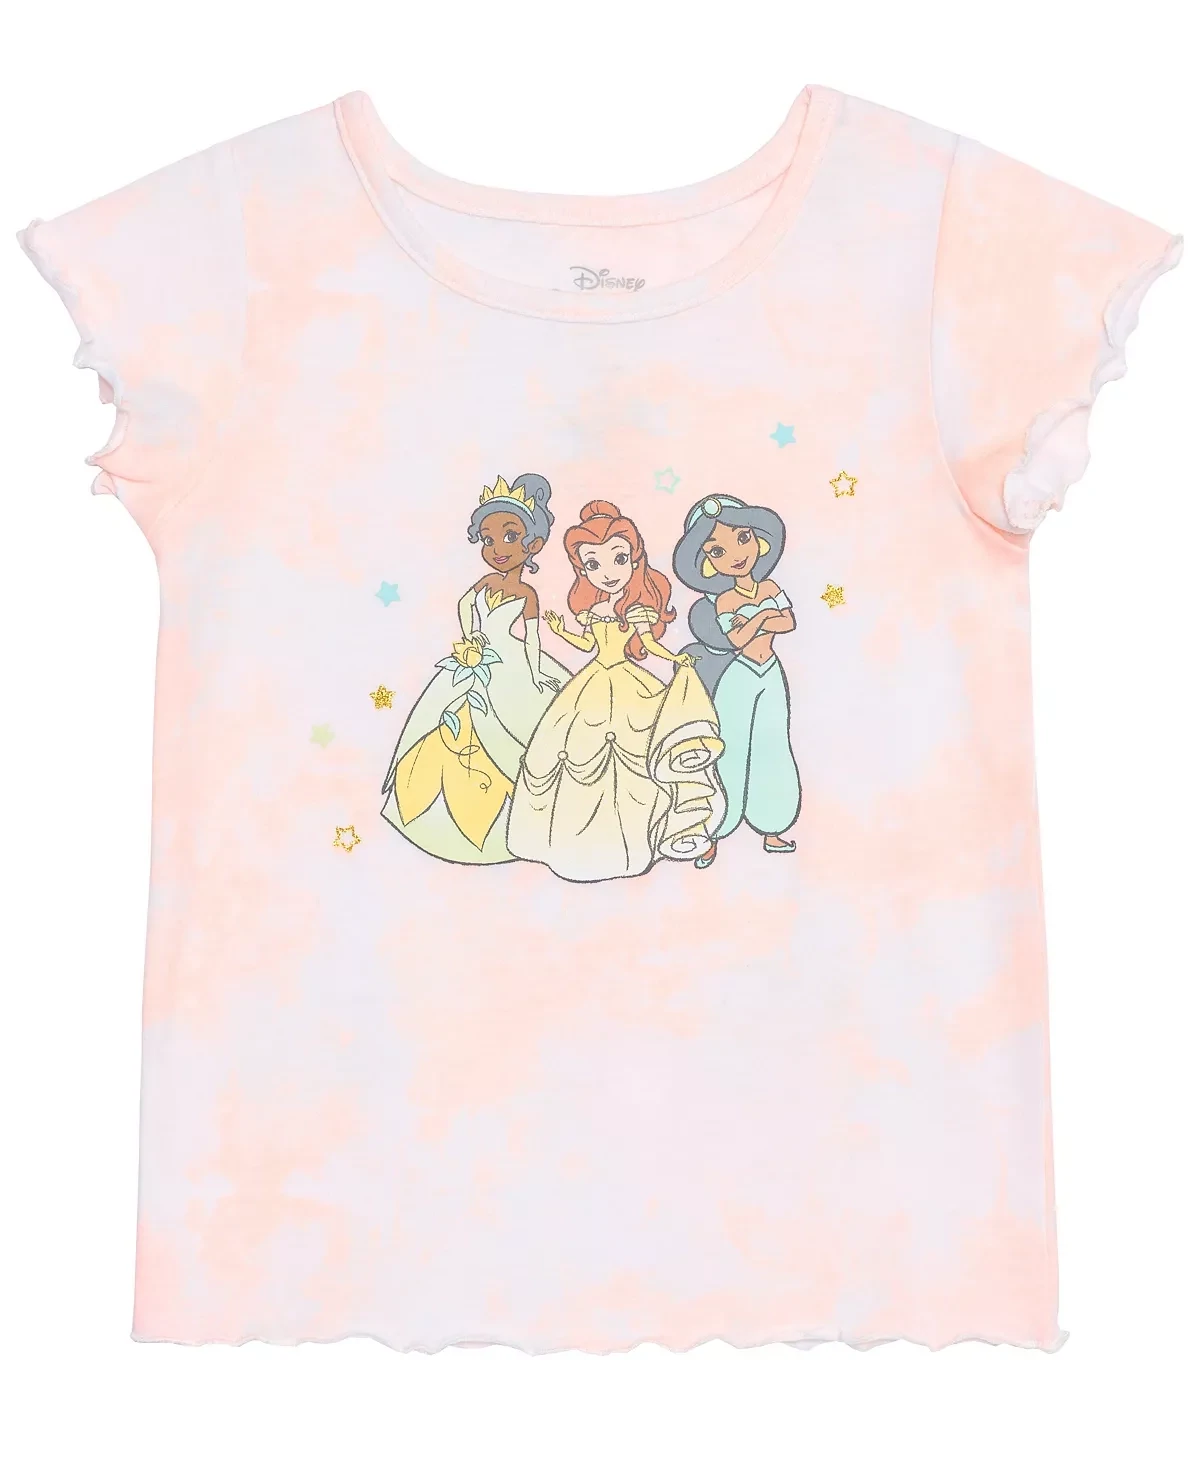 Toddler Girls Disney Princesses Lettuce Edge T-shirt, Size 3T